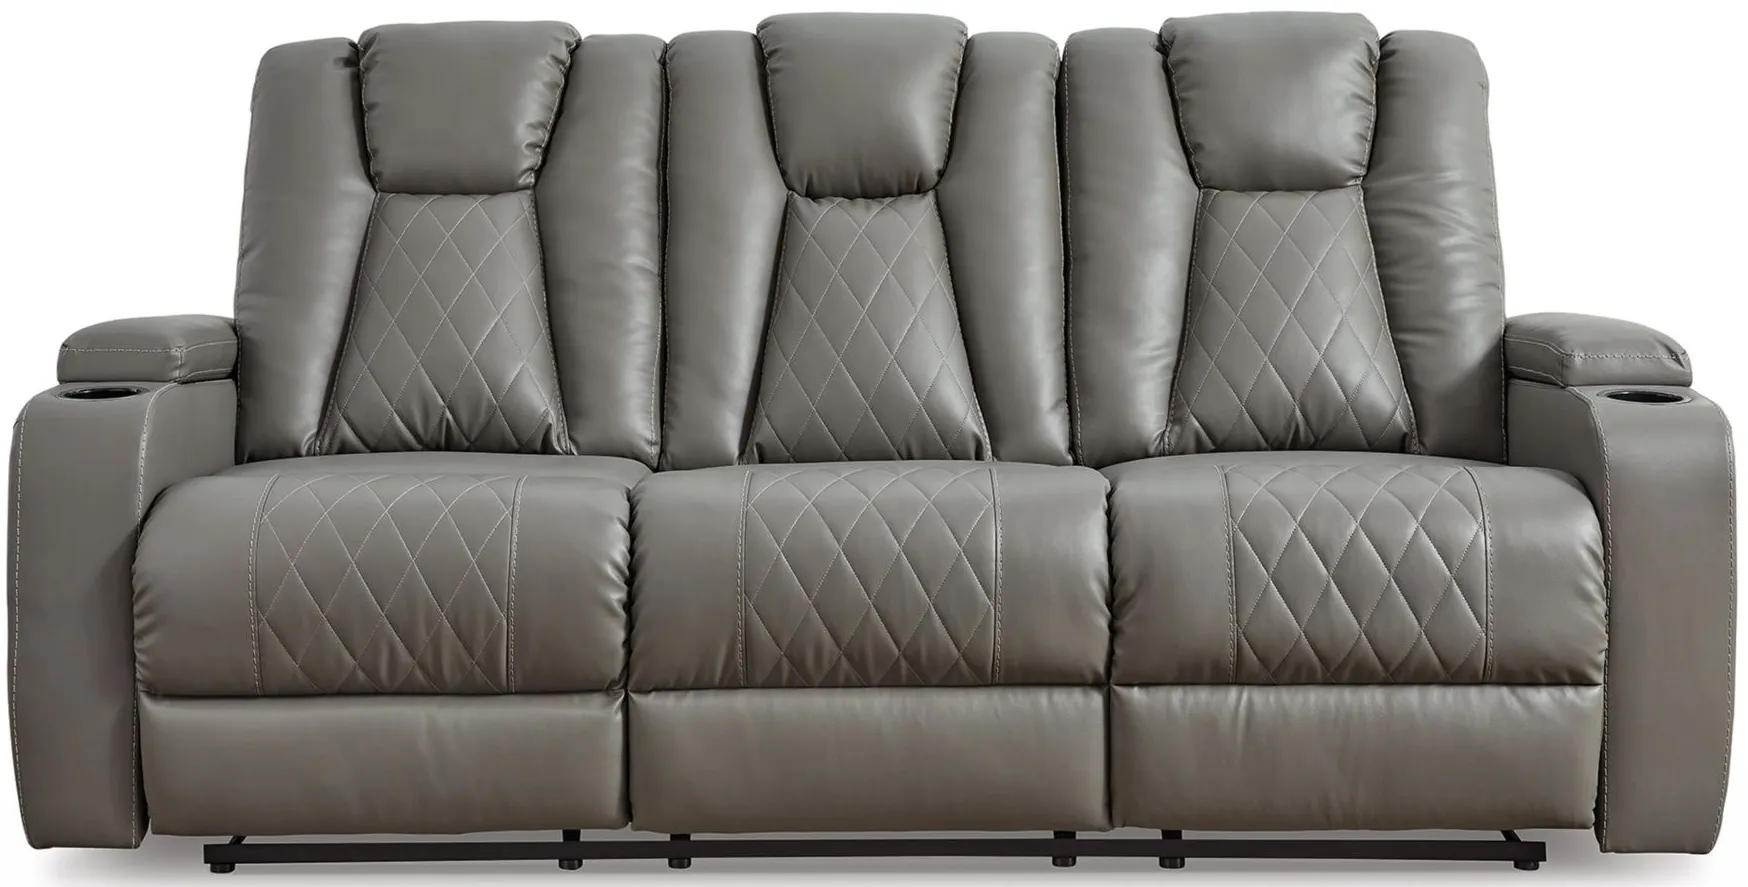 Mancin Reclining Sofa in Gray by Ashley Furniture